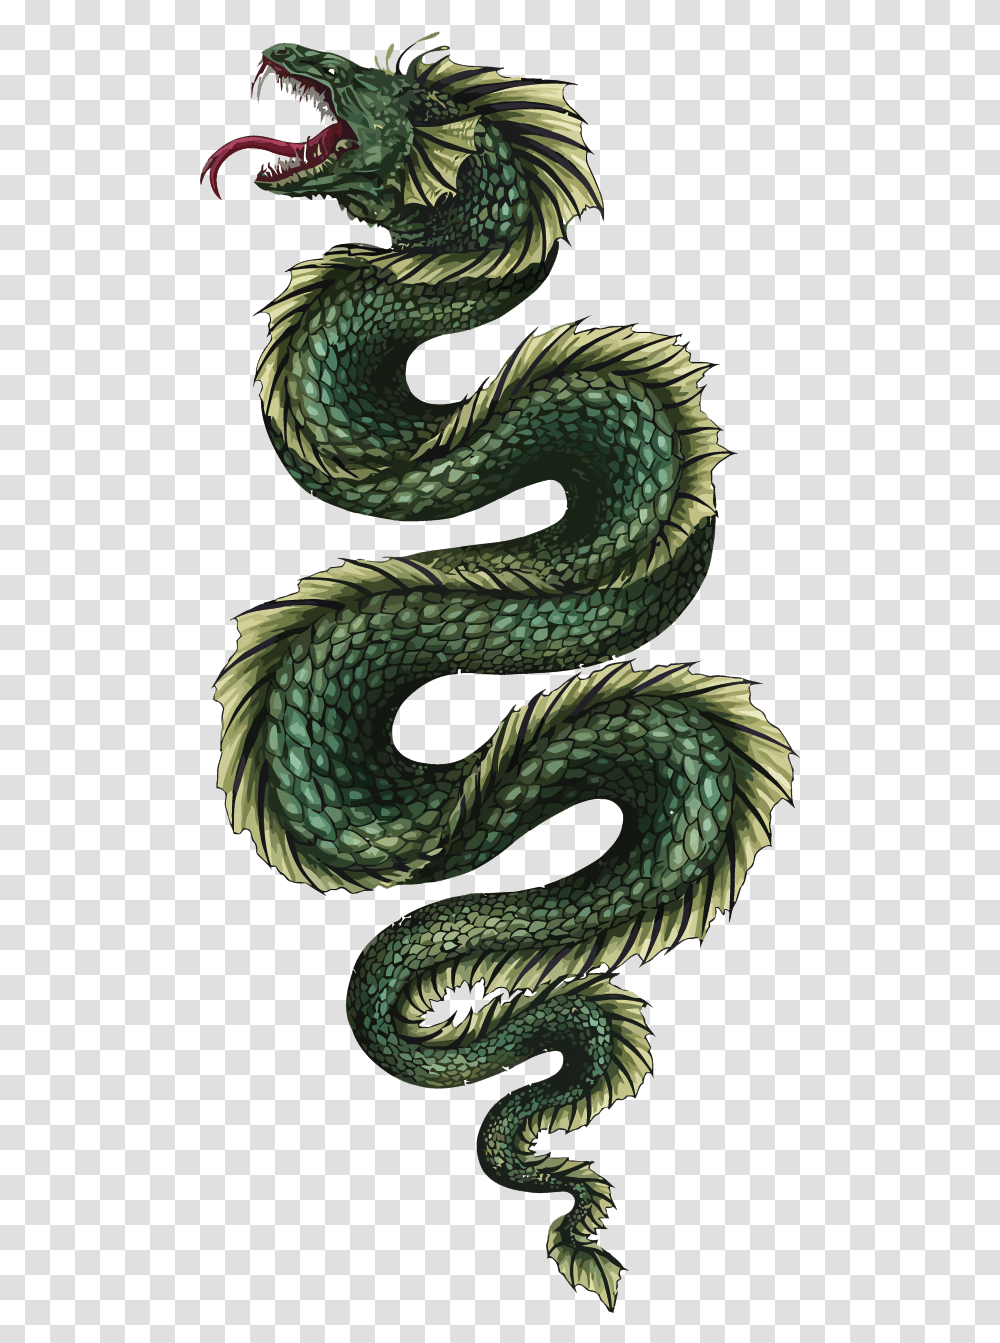 Midgard Serpent Chinese Dragon Vector Jxf6rmungandr Serpent Dragon, Snake, Reptile, Animal, Dinosaur Transparent Png